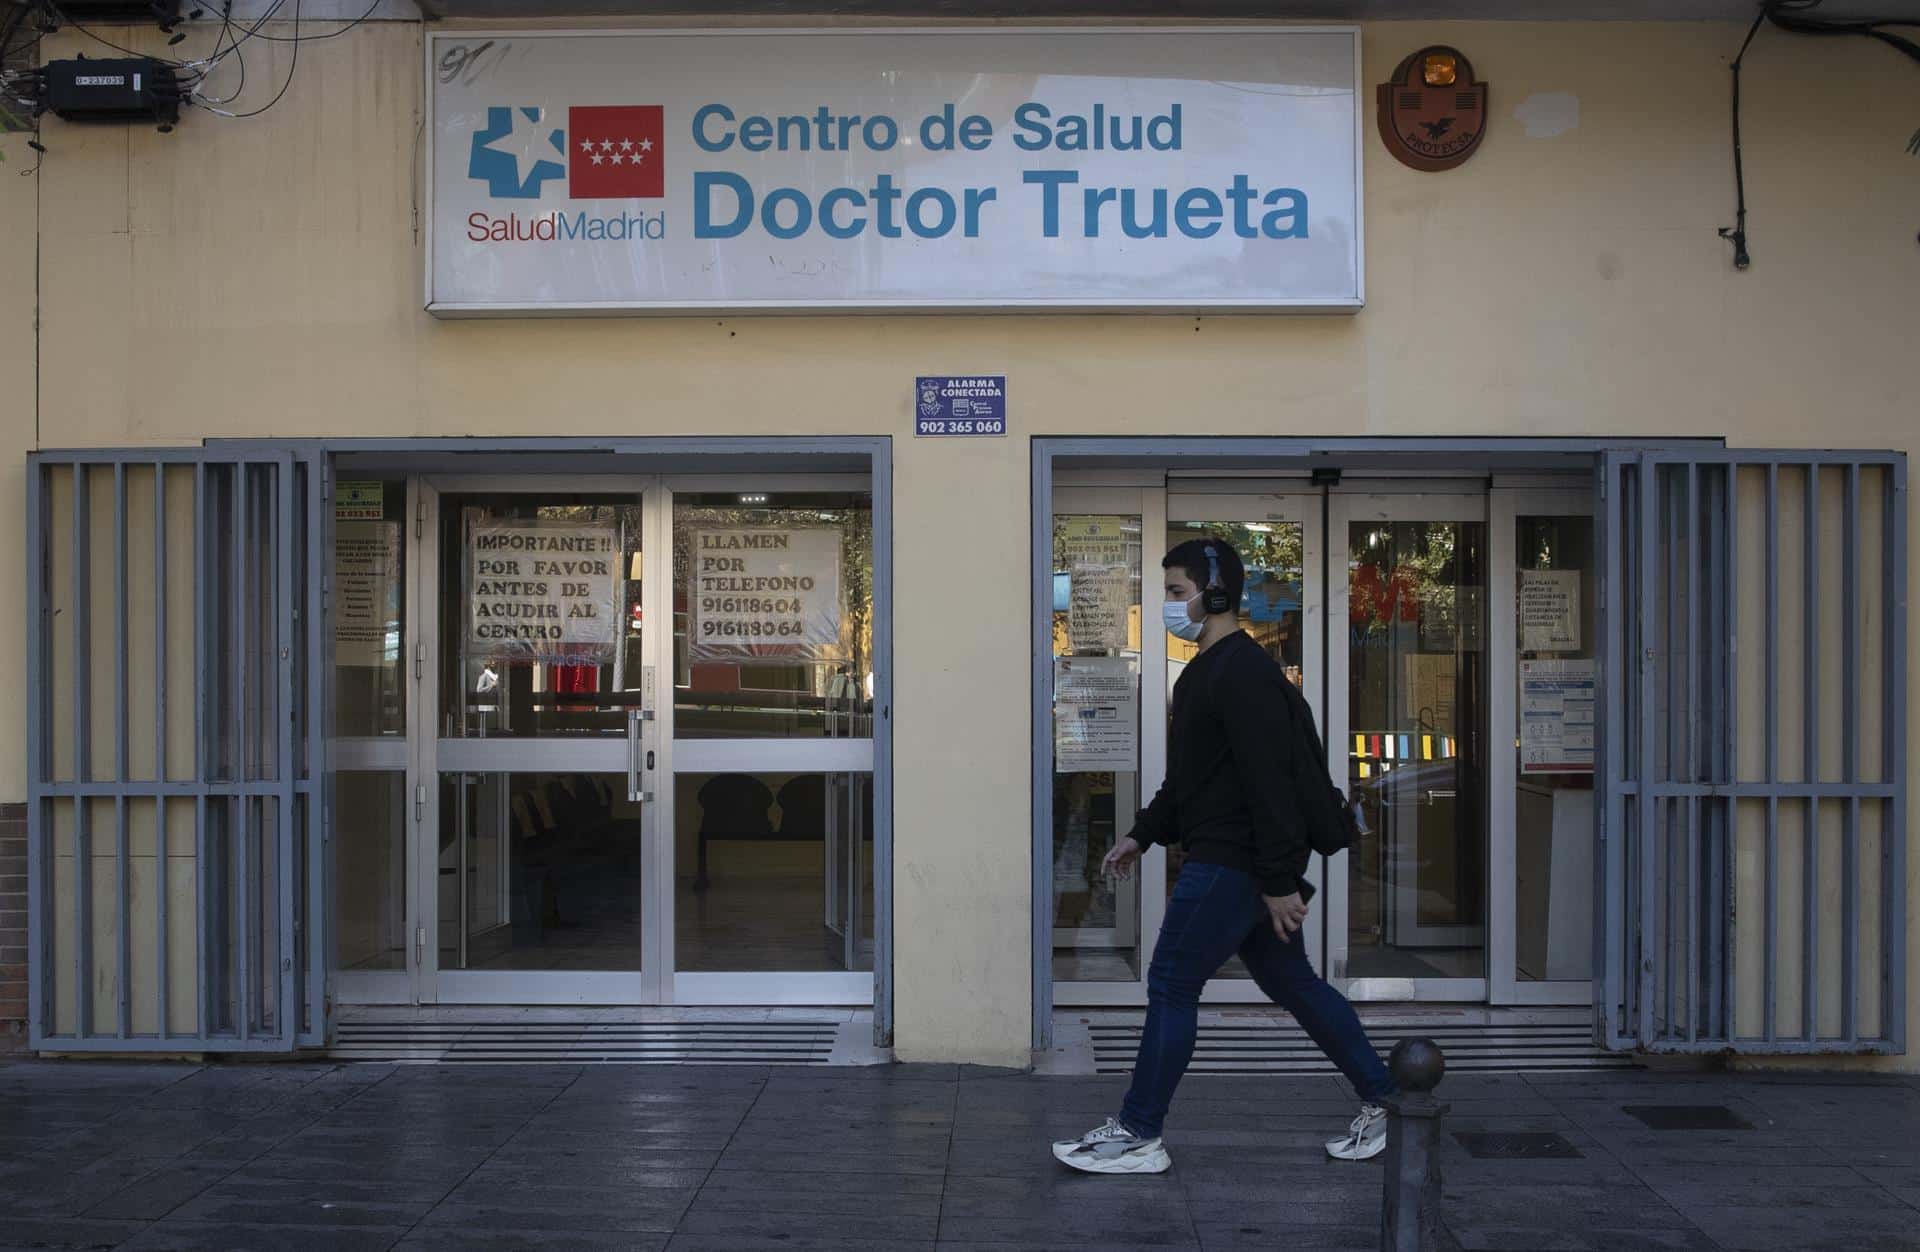 Centro de Salud Doctor Trueta en Alcorcón. EP